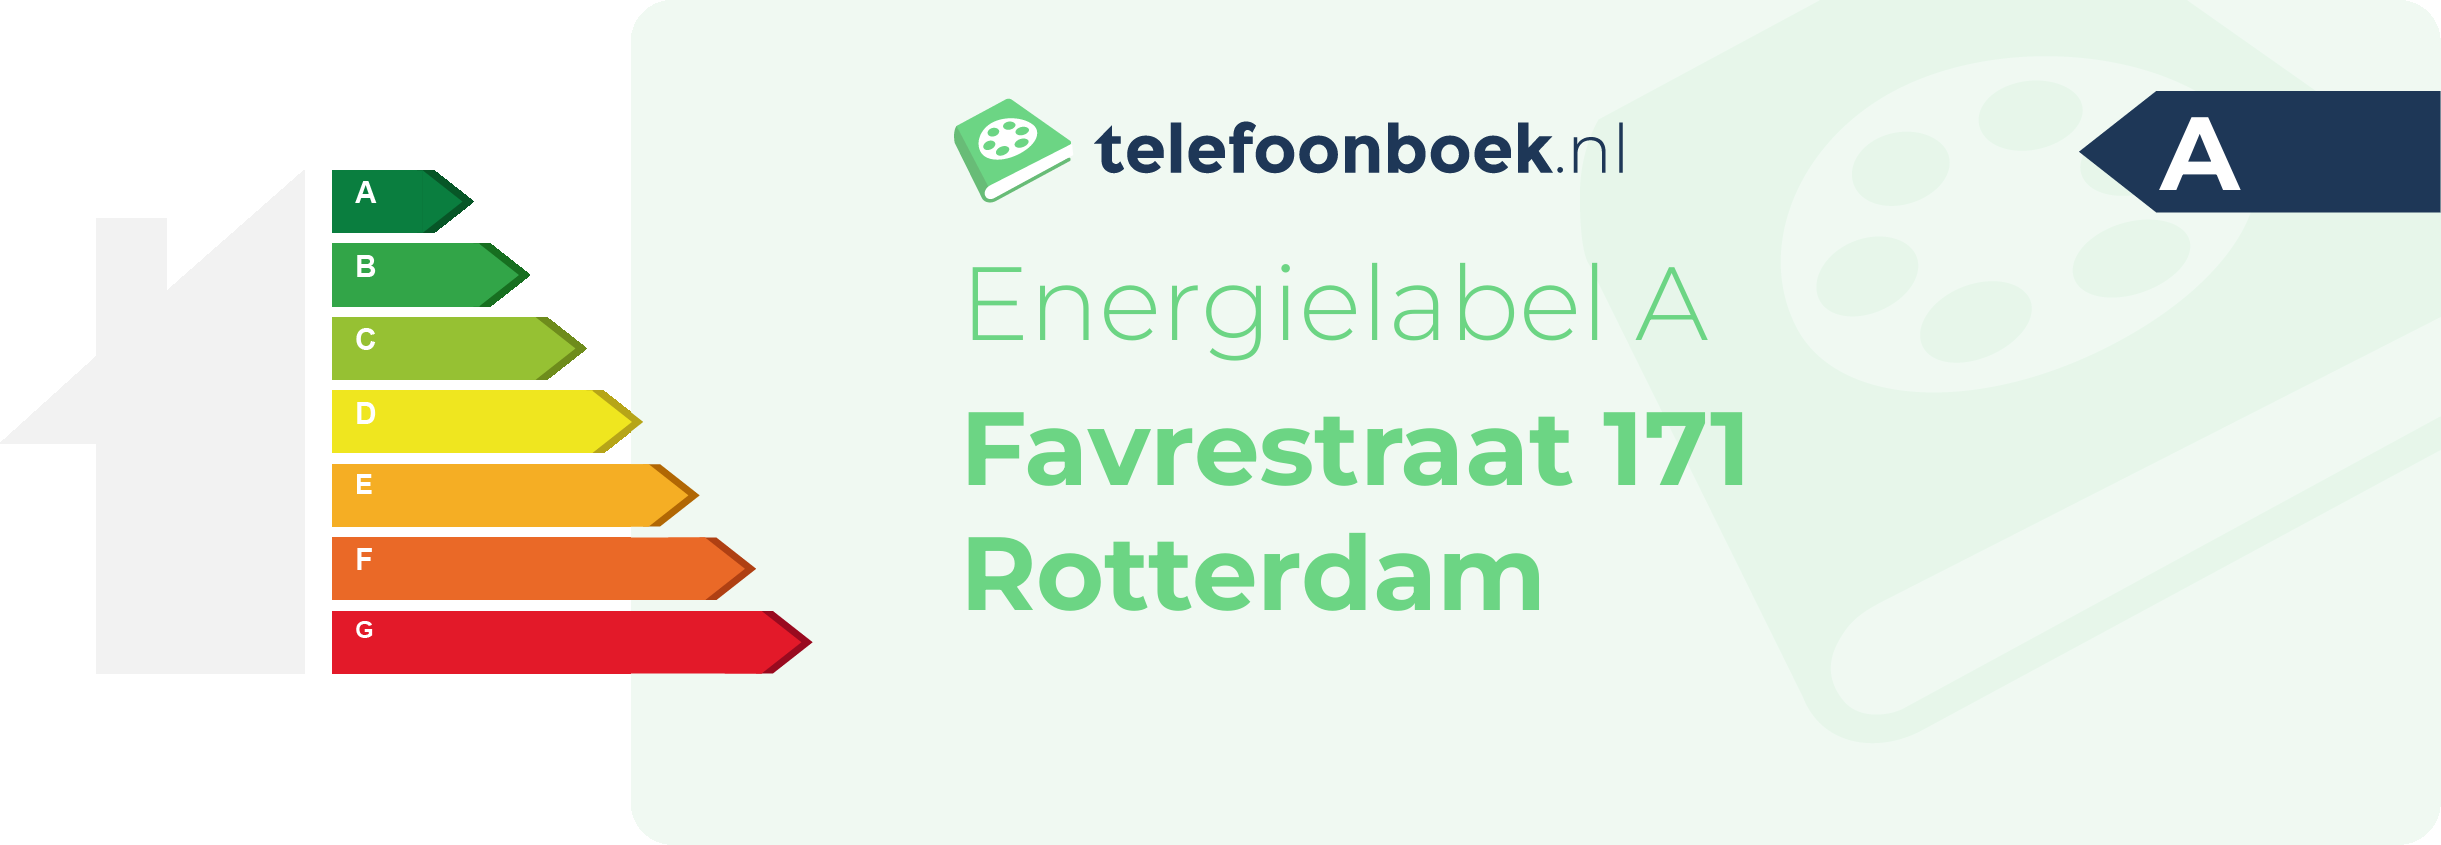 Energielabel Favrestraat 171 Rotterdam